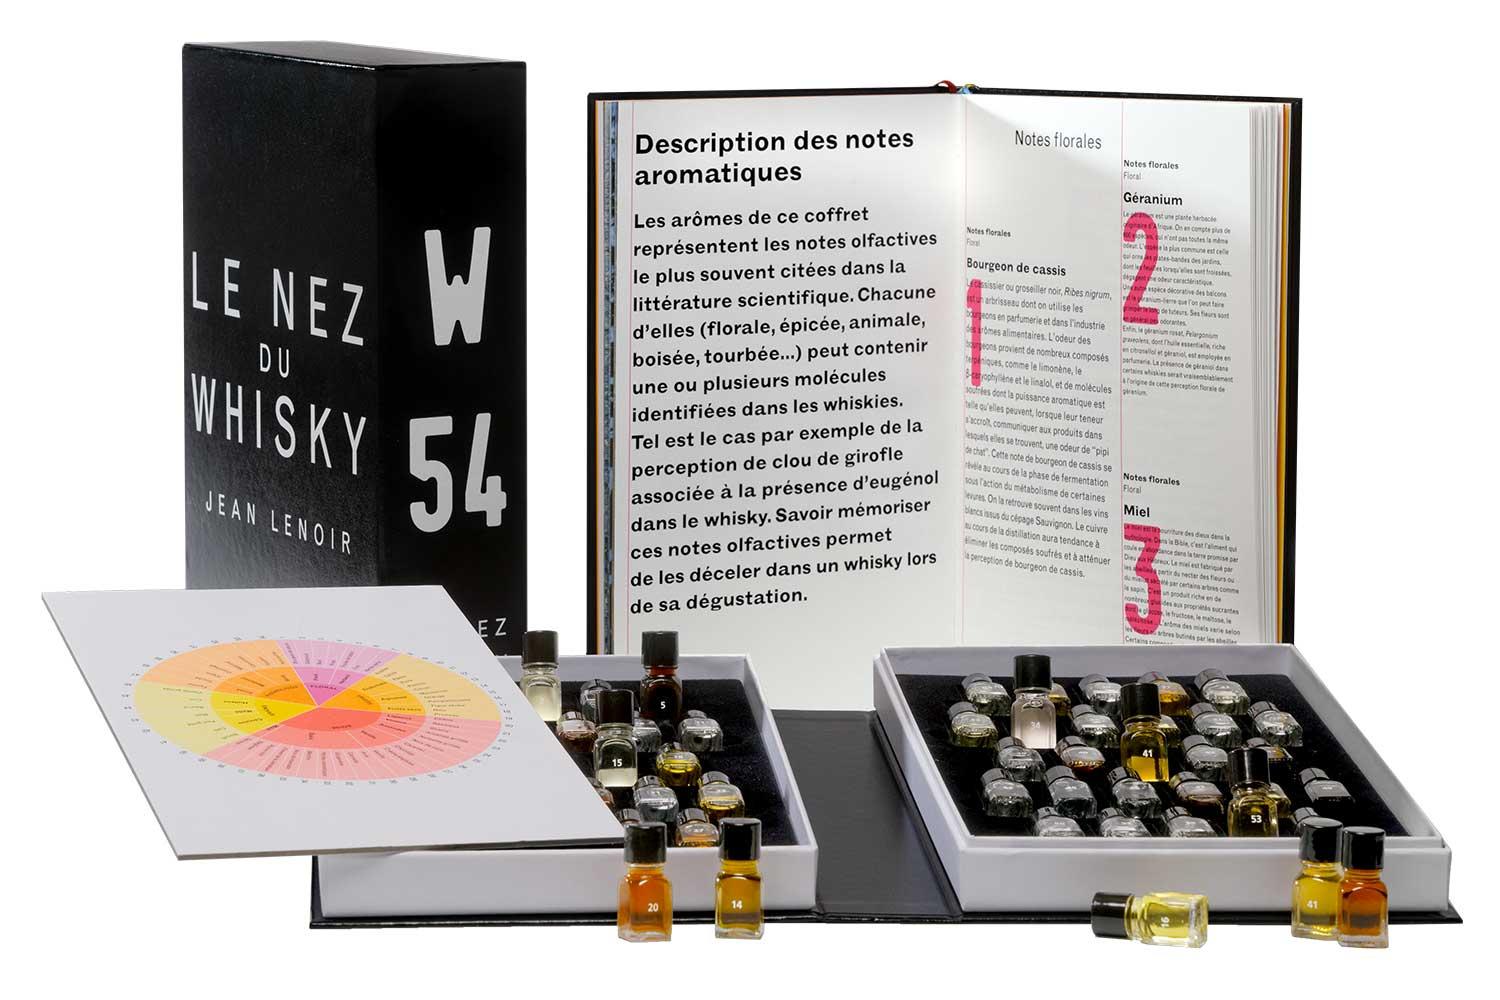 Le Nez du whisky 54 aromas - Accesorios Whisky 